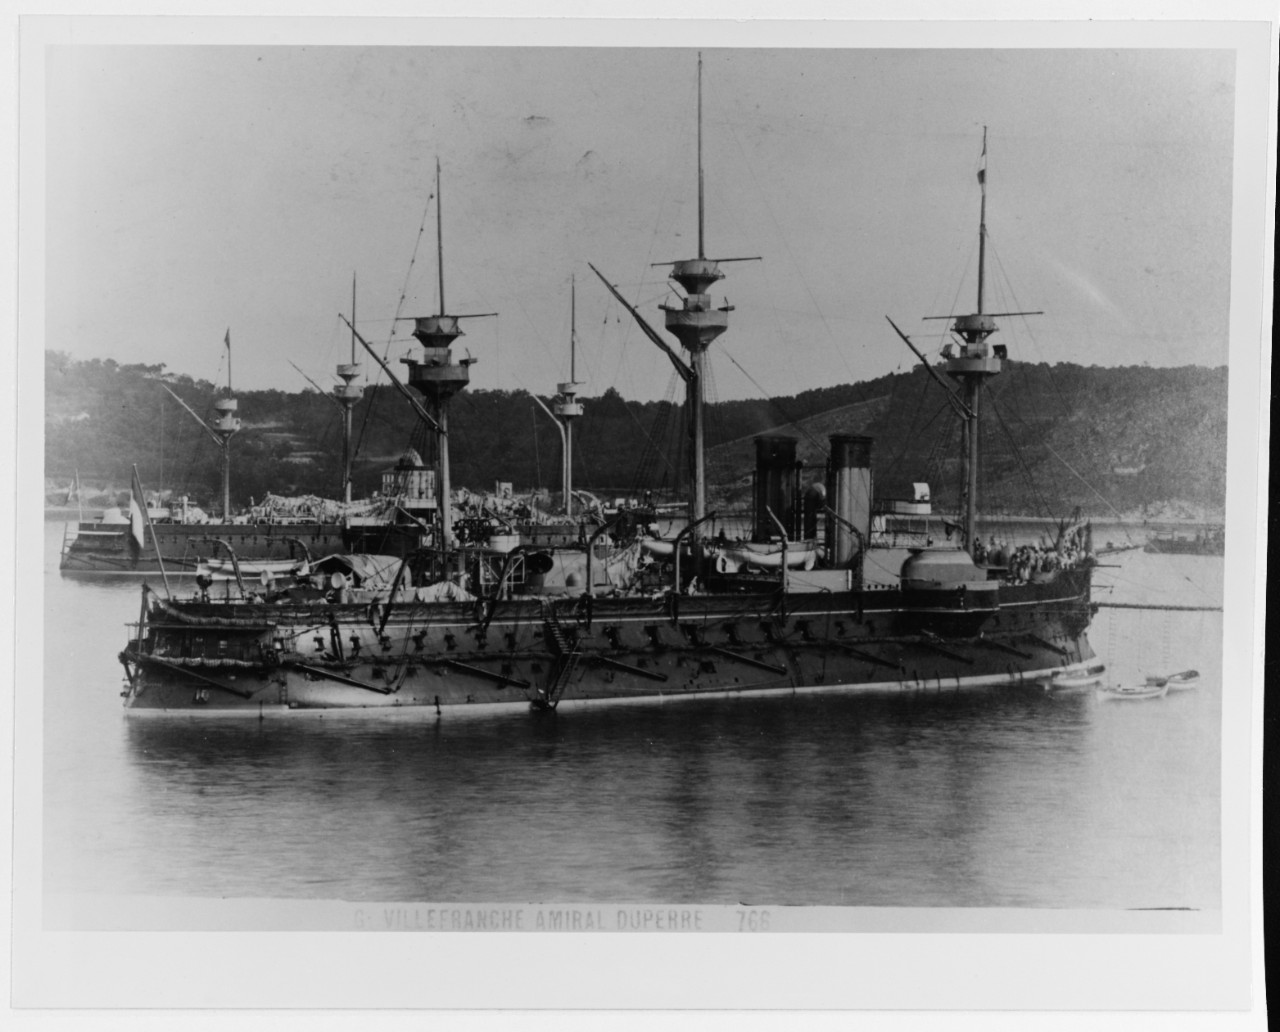 AMIRAL DUPERRE (French battleship, 1879-1909)